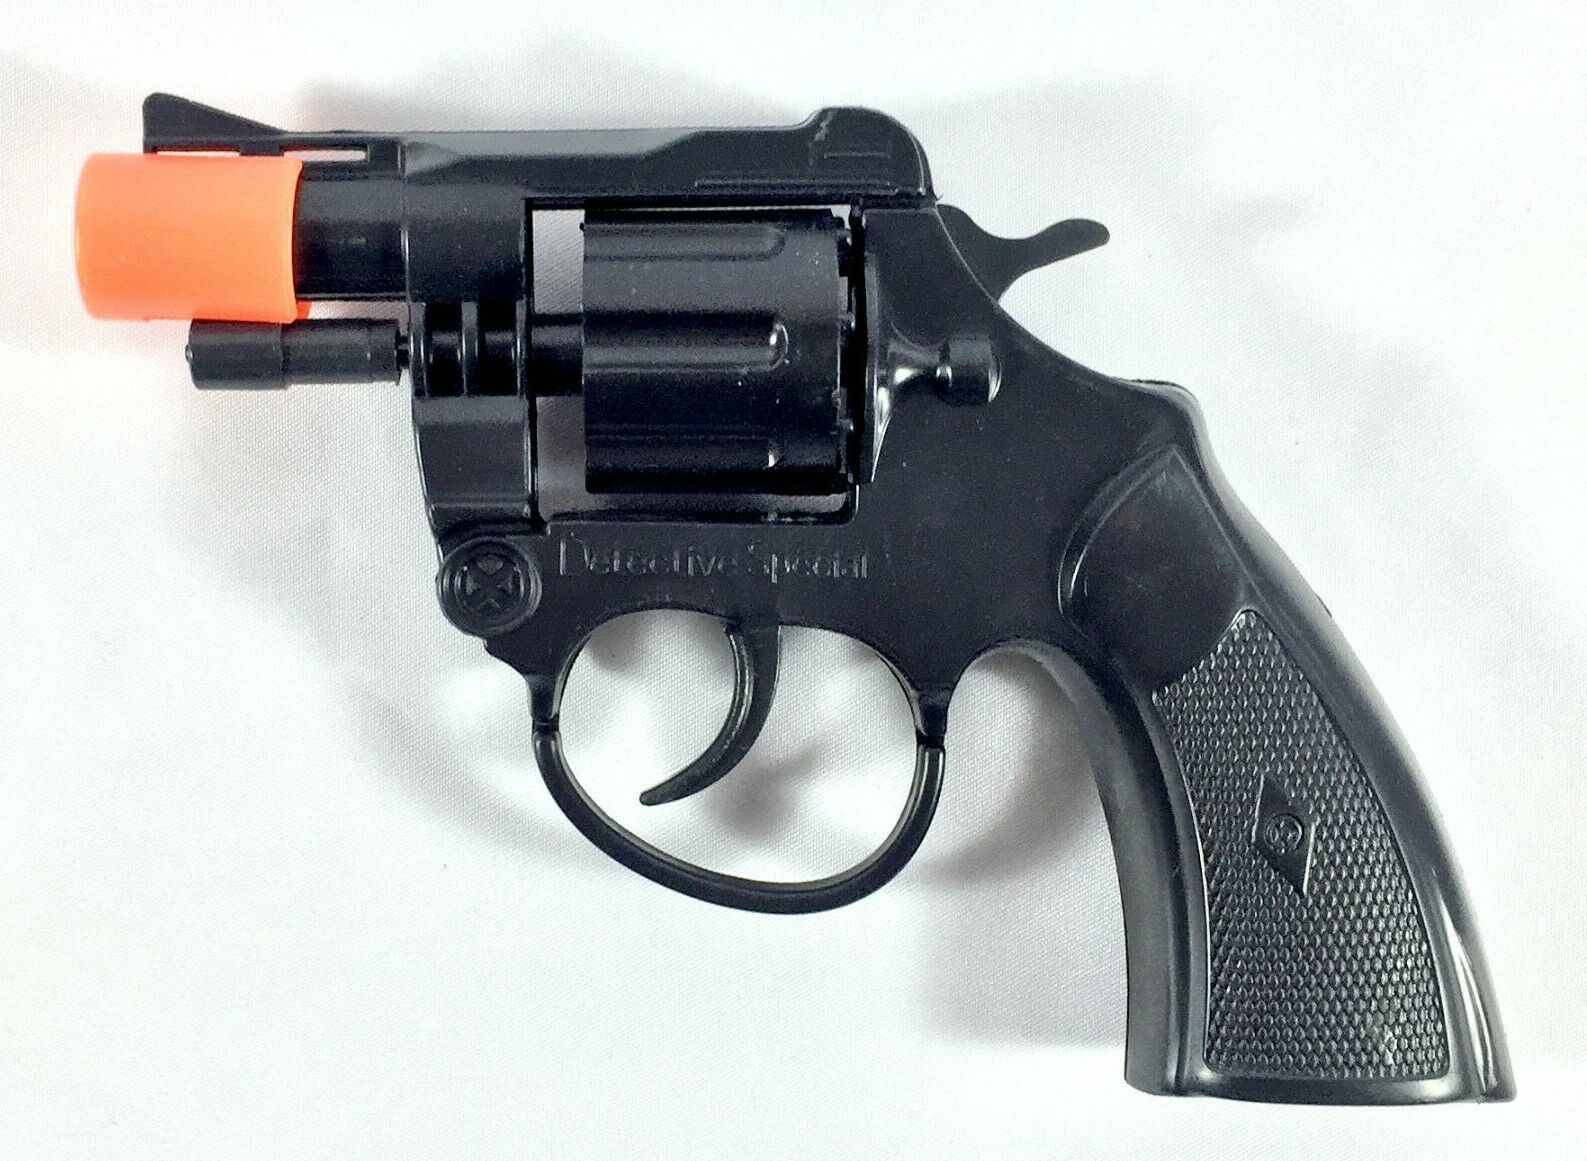 Super Cap Gun Toy Pistol Handgun 8 shot Snub-Nosed Revolver Military Police